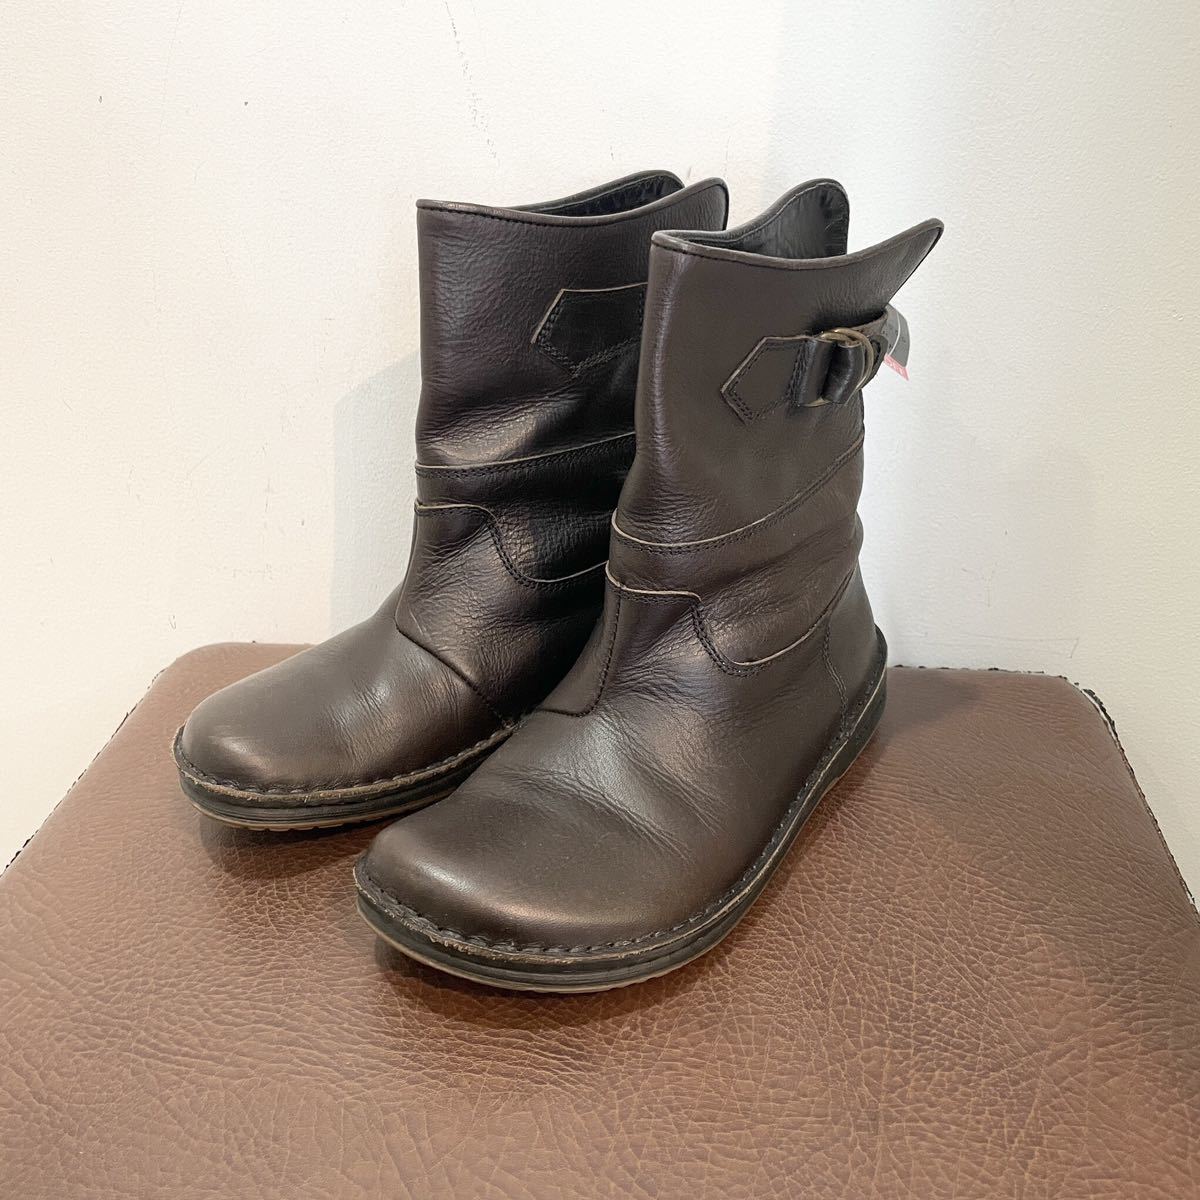 BIRKENSTOCK/boots/leather/brown/ladies/ビルケンシュトック/ブーツ/レザー/茶色/レディース